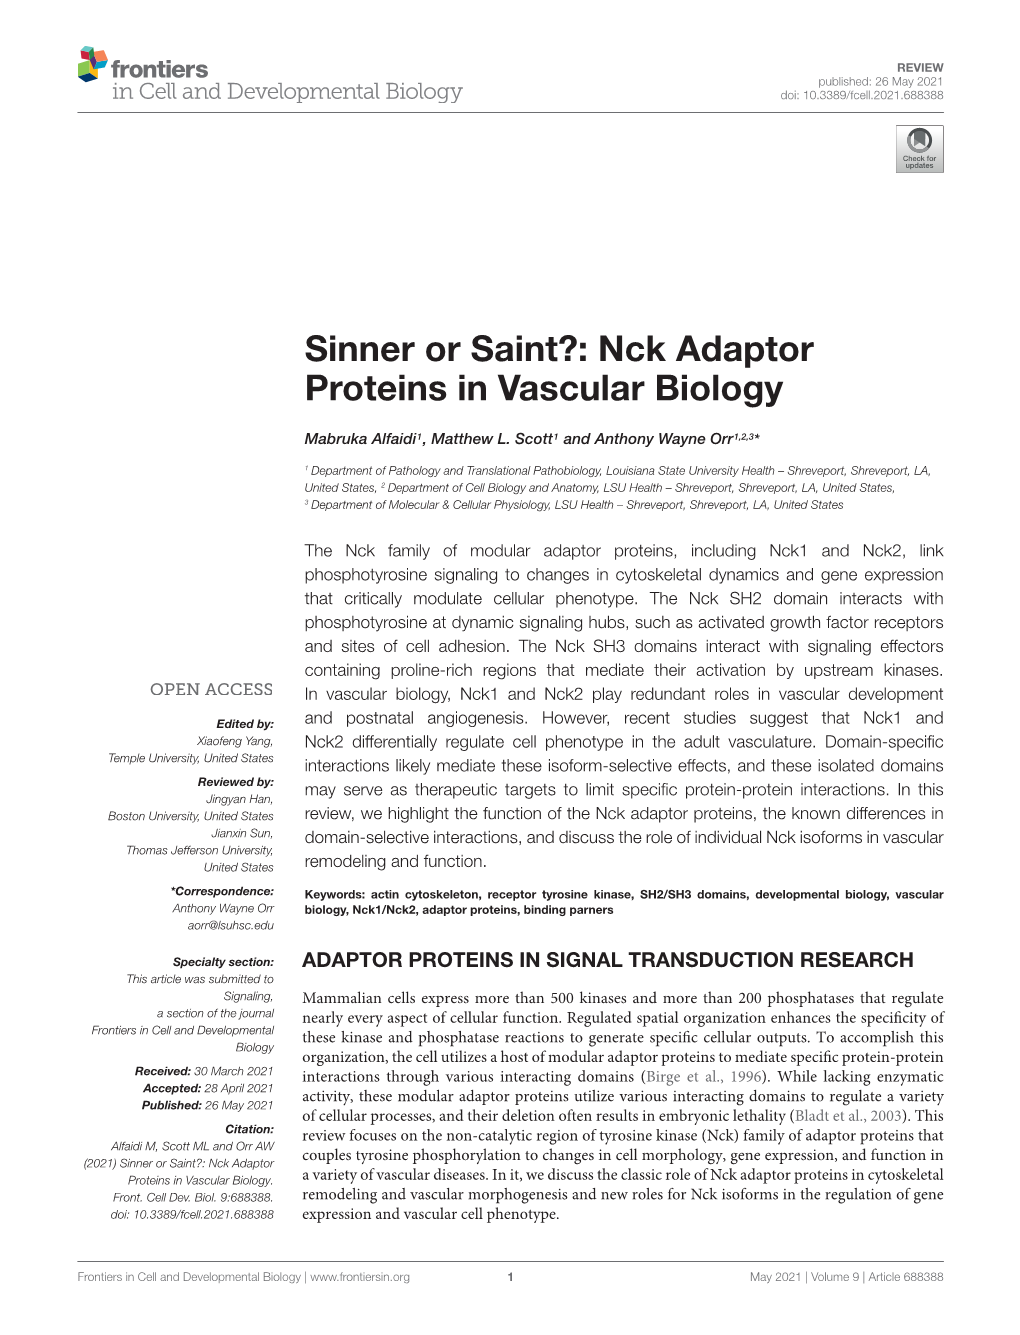 Nck Adaptor Proteins in Vascular Biology